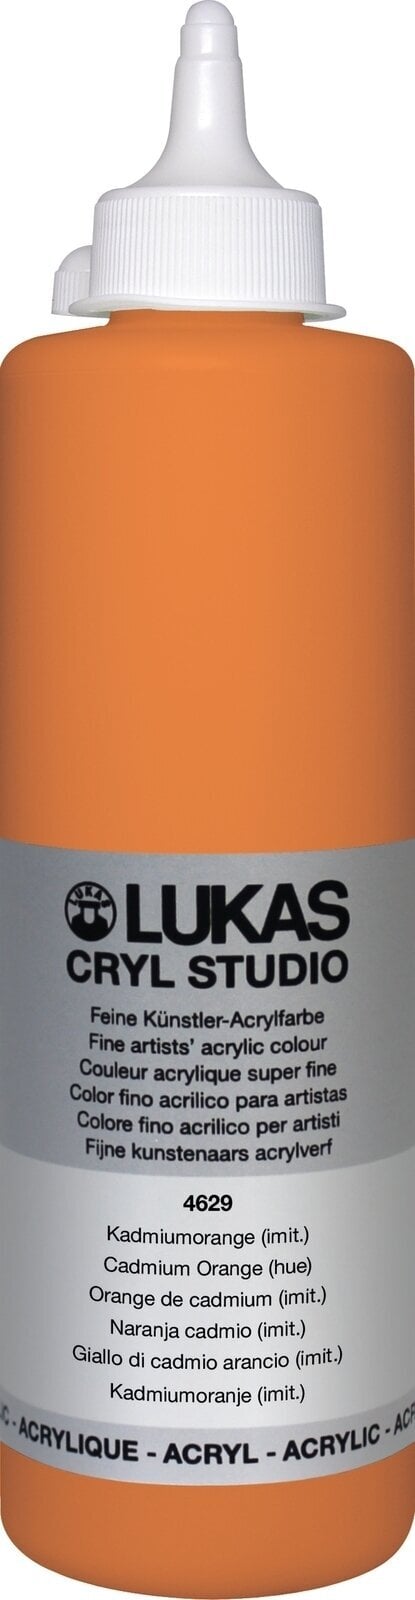 Acrylic Paint Lukas Cryl Studio Plastic Bottle Acrylic Paint Cadmium Orange Hue 500 ml 1 pc